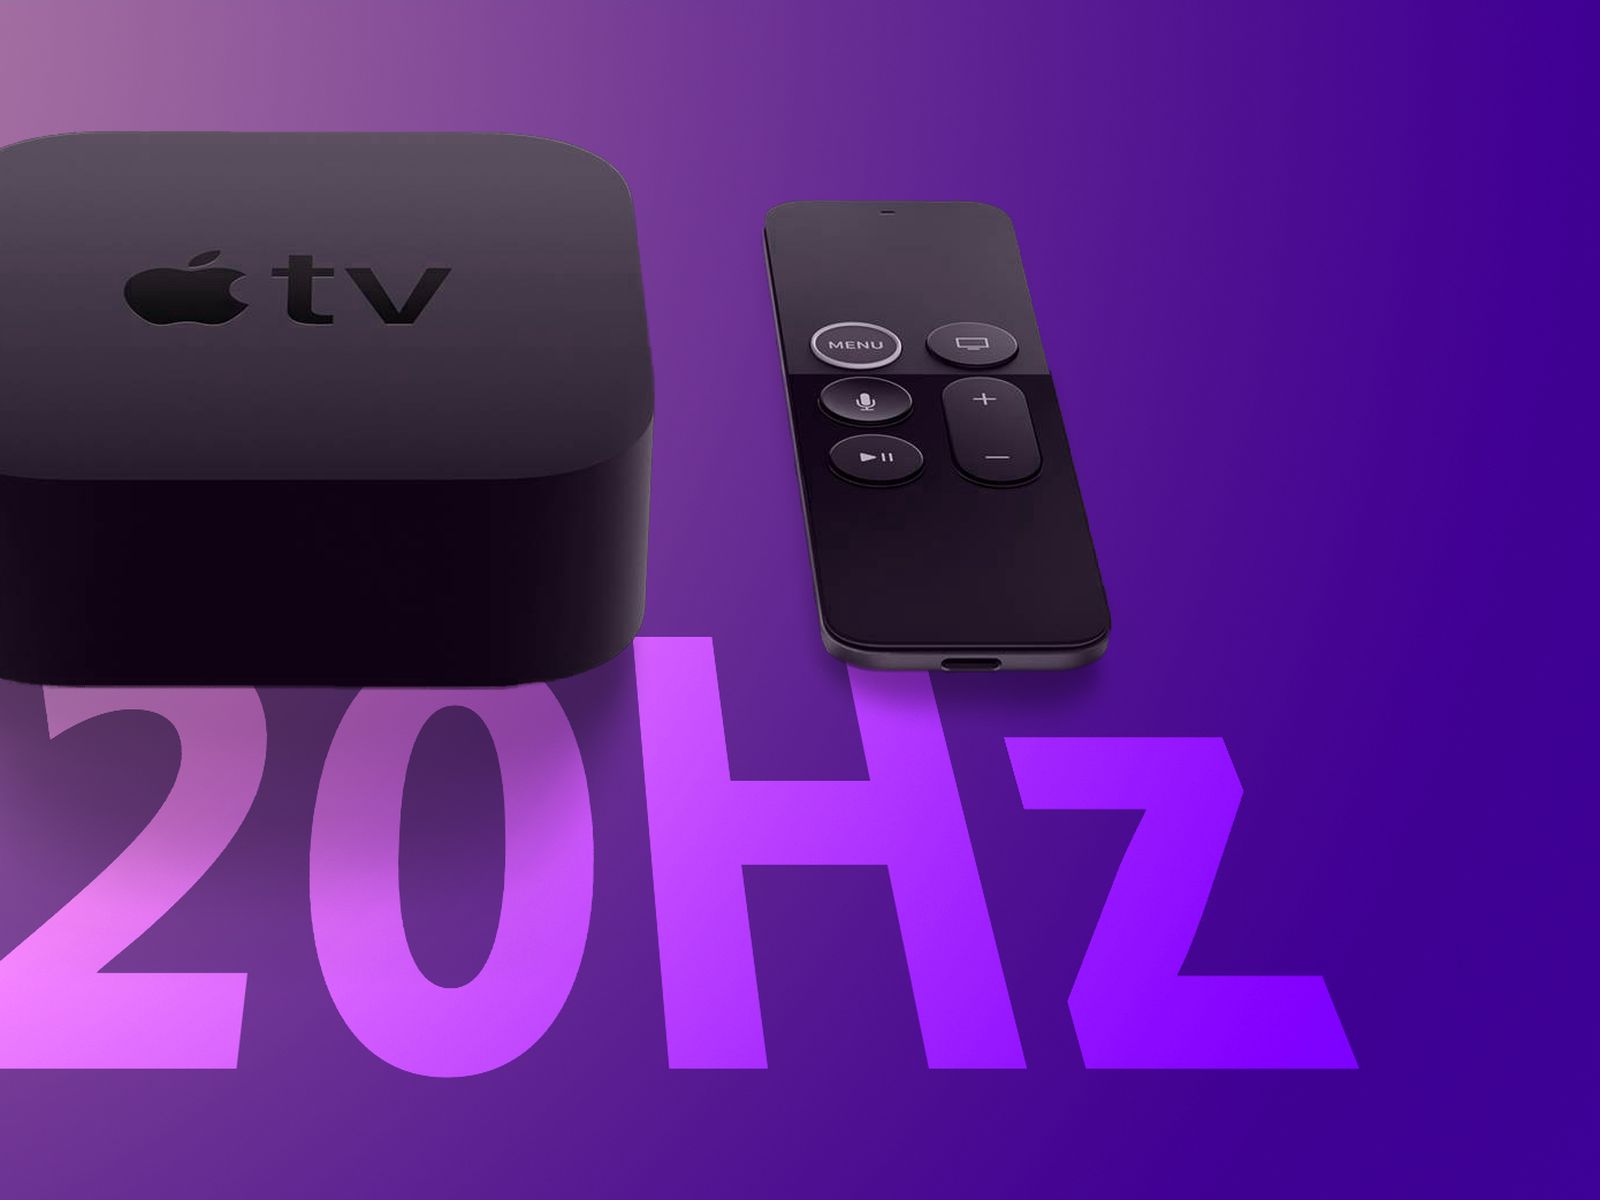 Upcoming Apple TV Could Support 120Hz Refresh Rate According tvOS 14.5 Beta Code - MacRumors